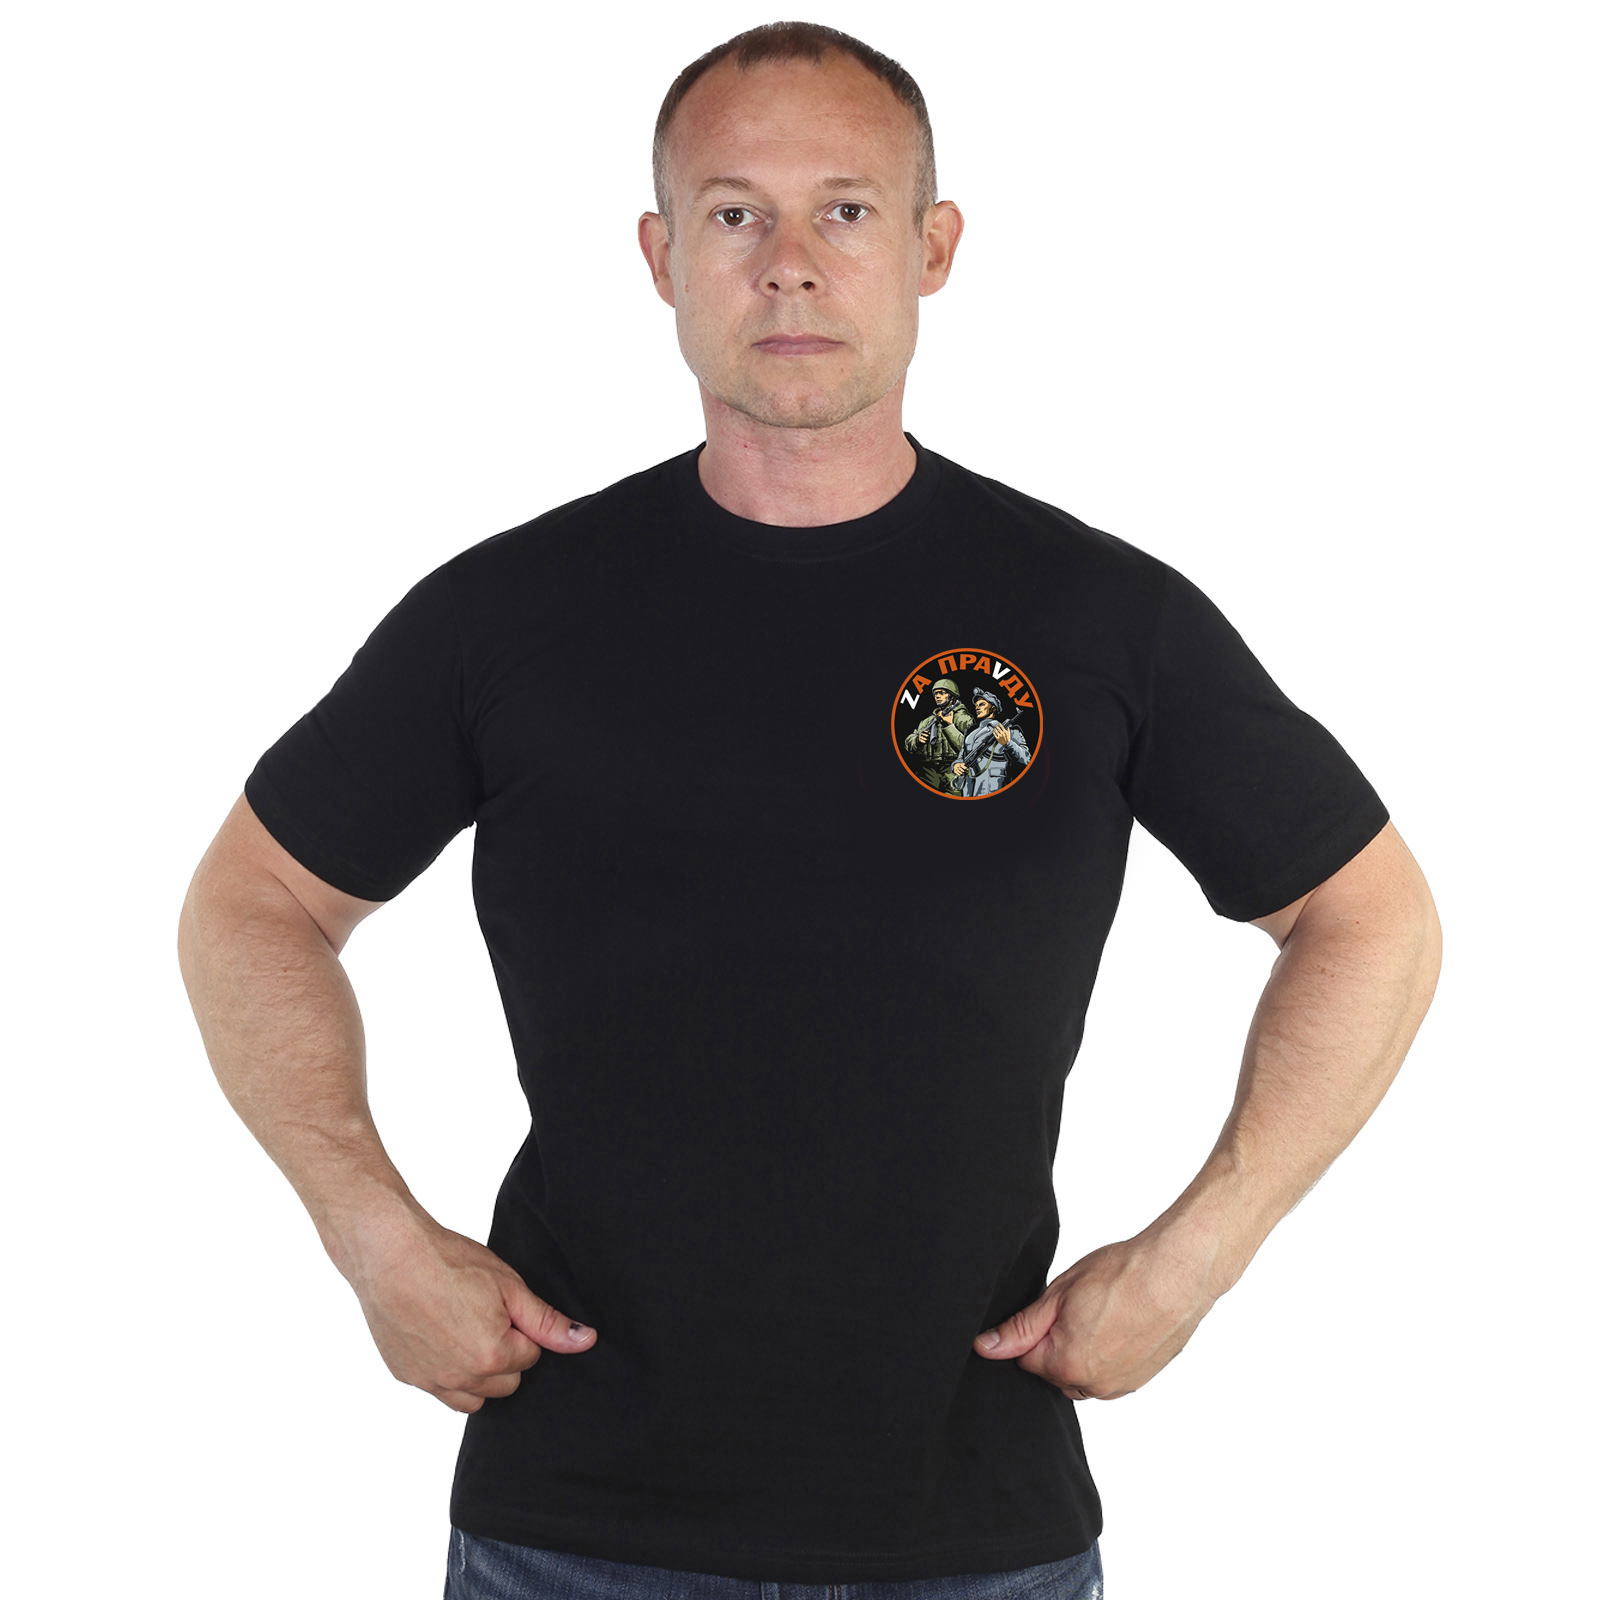 Чёрная футболка с термотрансфером "Zа праVду"